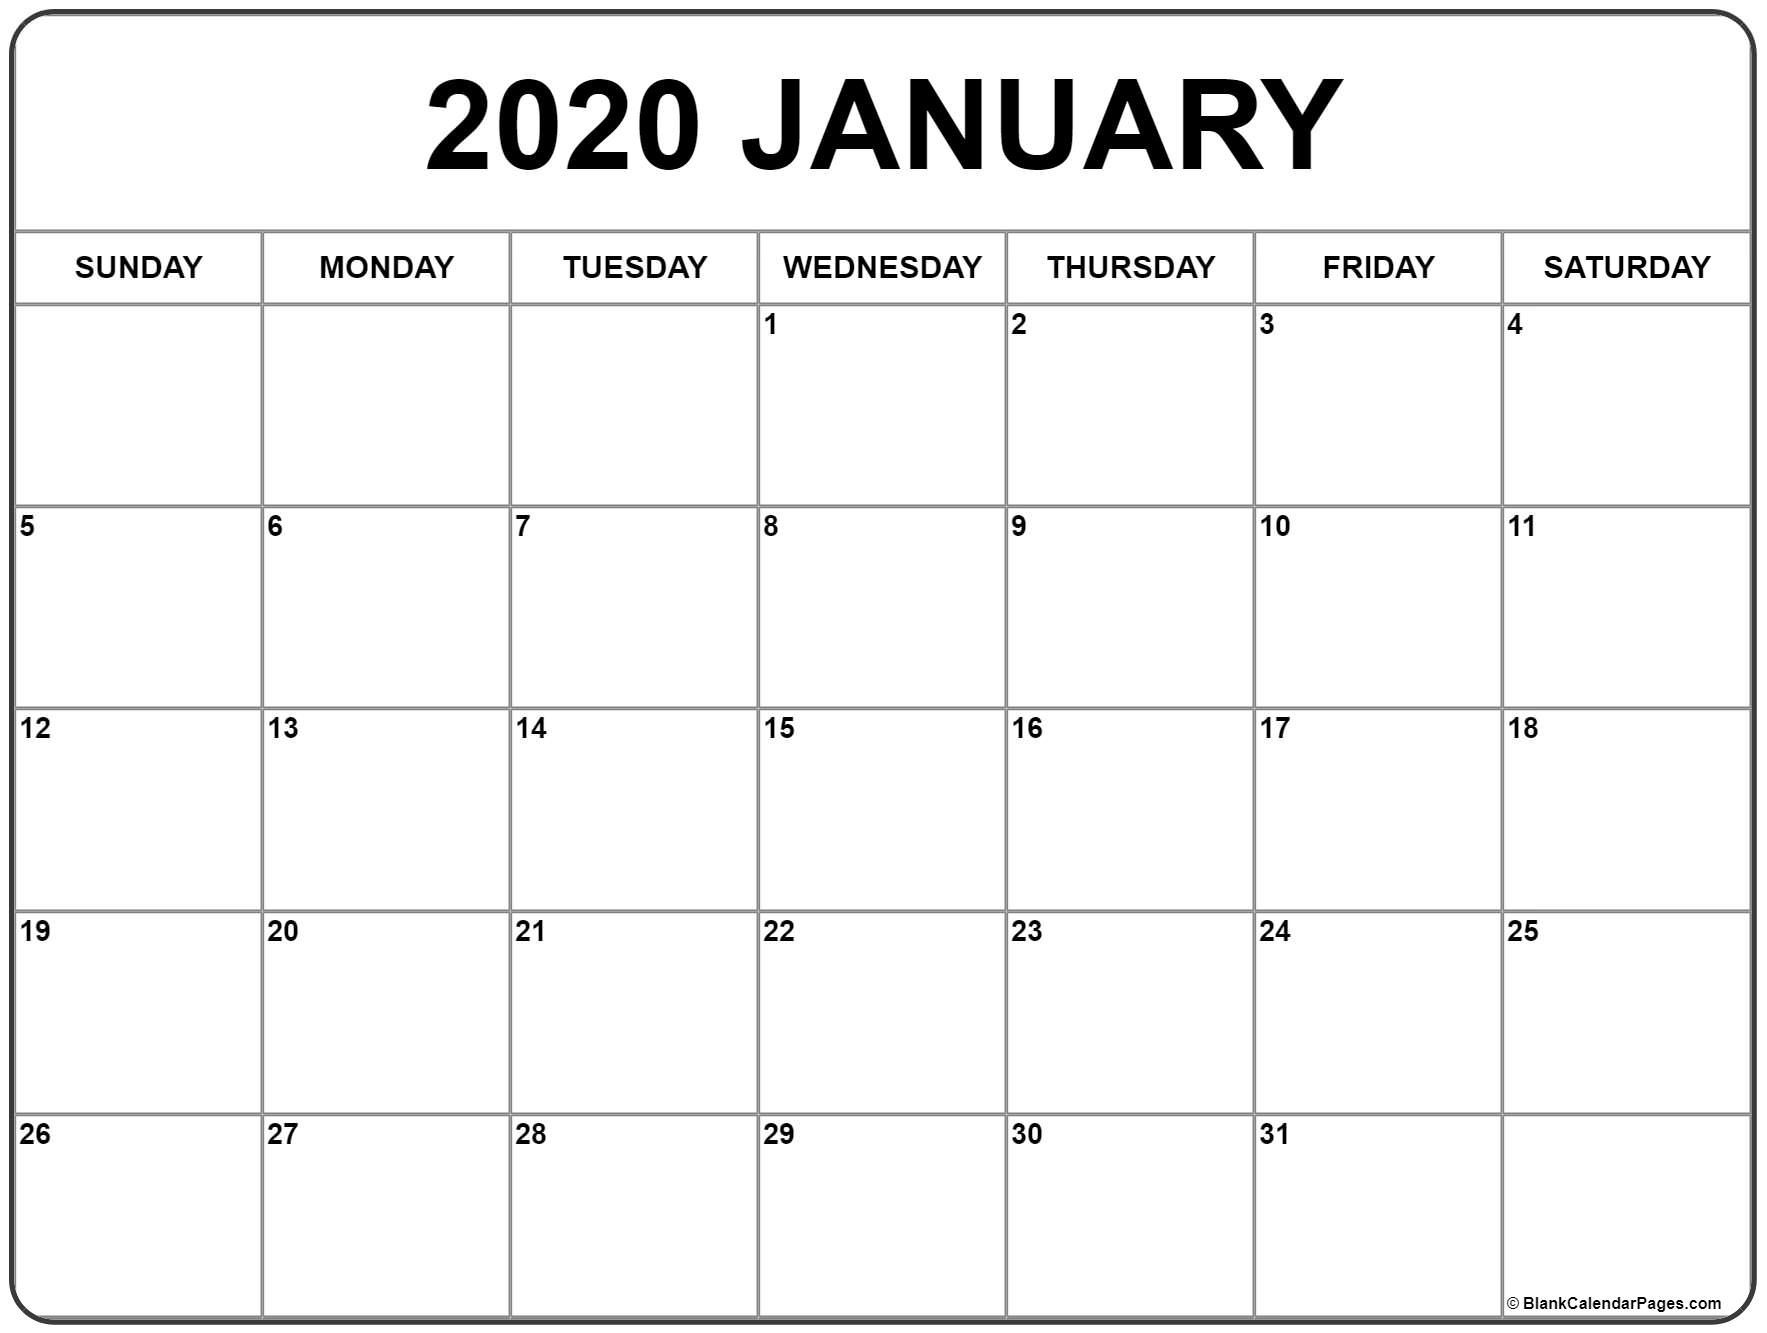 January 2020 Calendar | Free Printable Monthly Calendars 2020 Black And White Printable Calendars